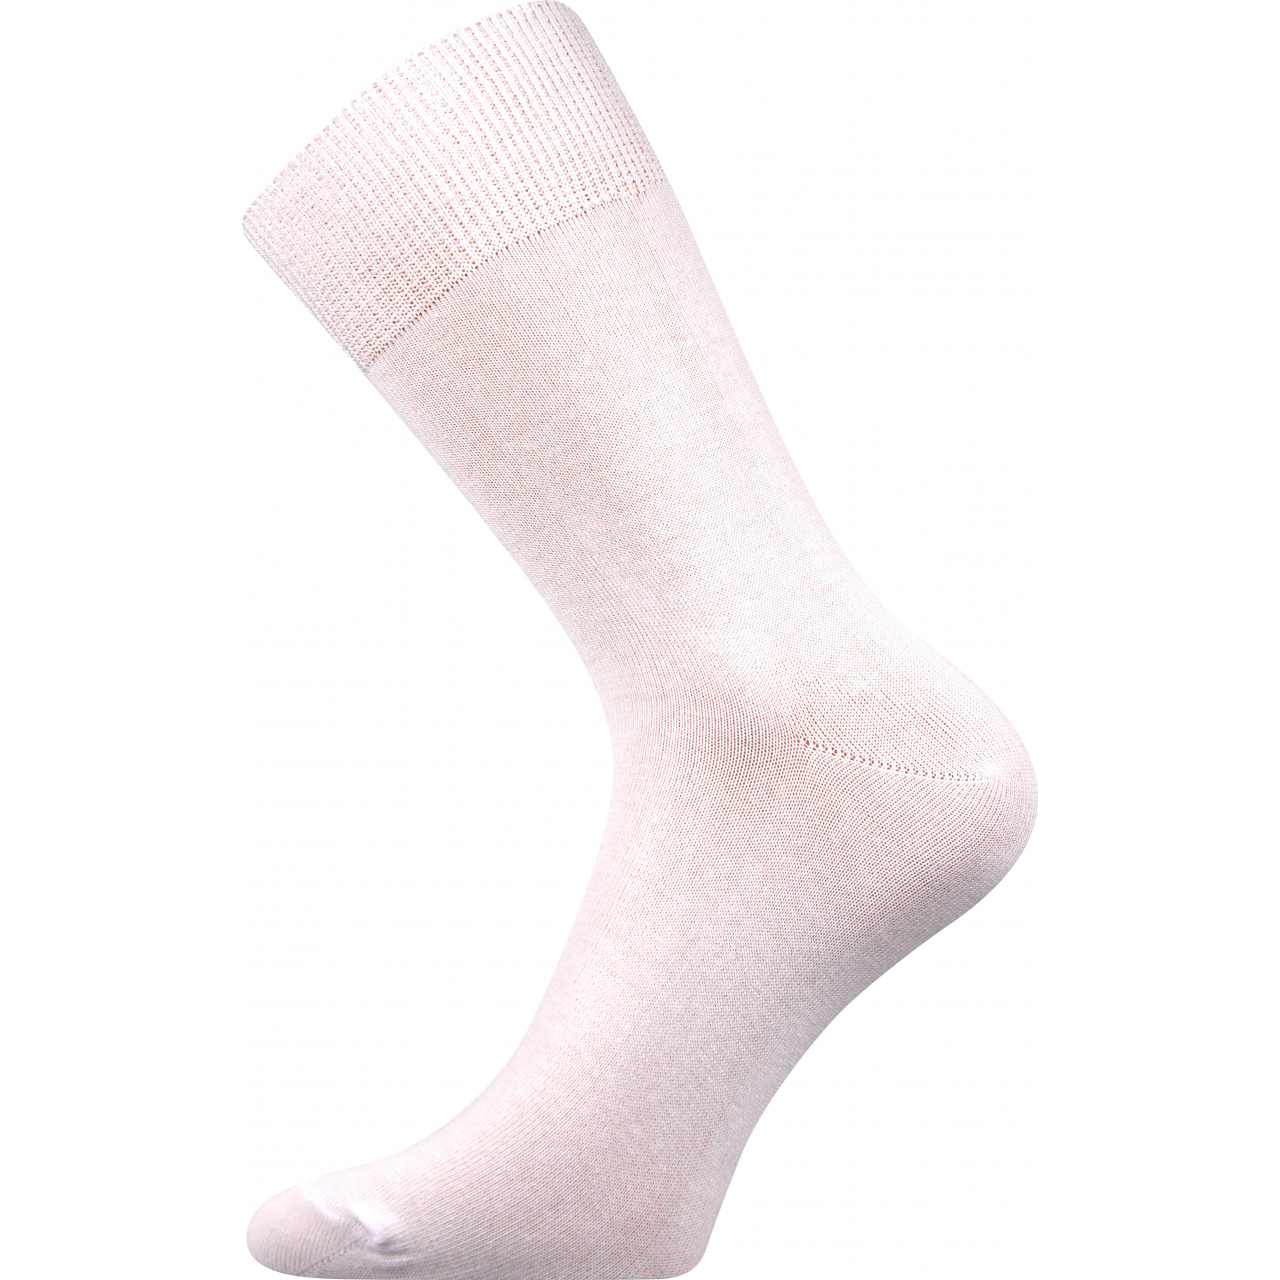 Ponožky unisex klasické Boma Radovan-a - bílé, 35-38